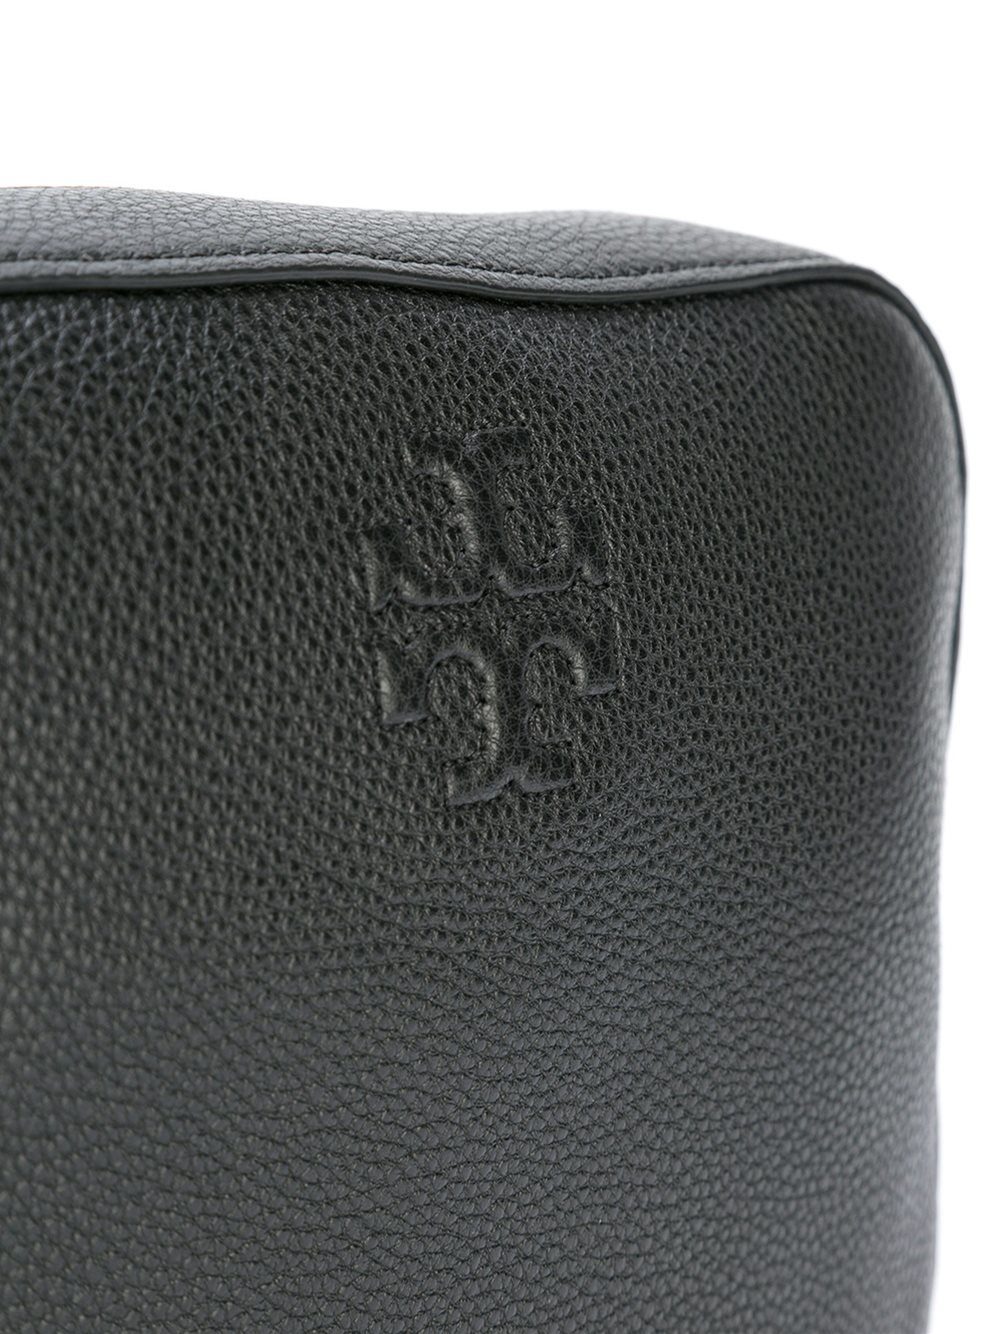 Tory Burch Leather Tassel Detail Crossbody Bag in Black - Lyst